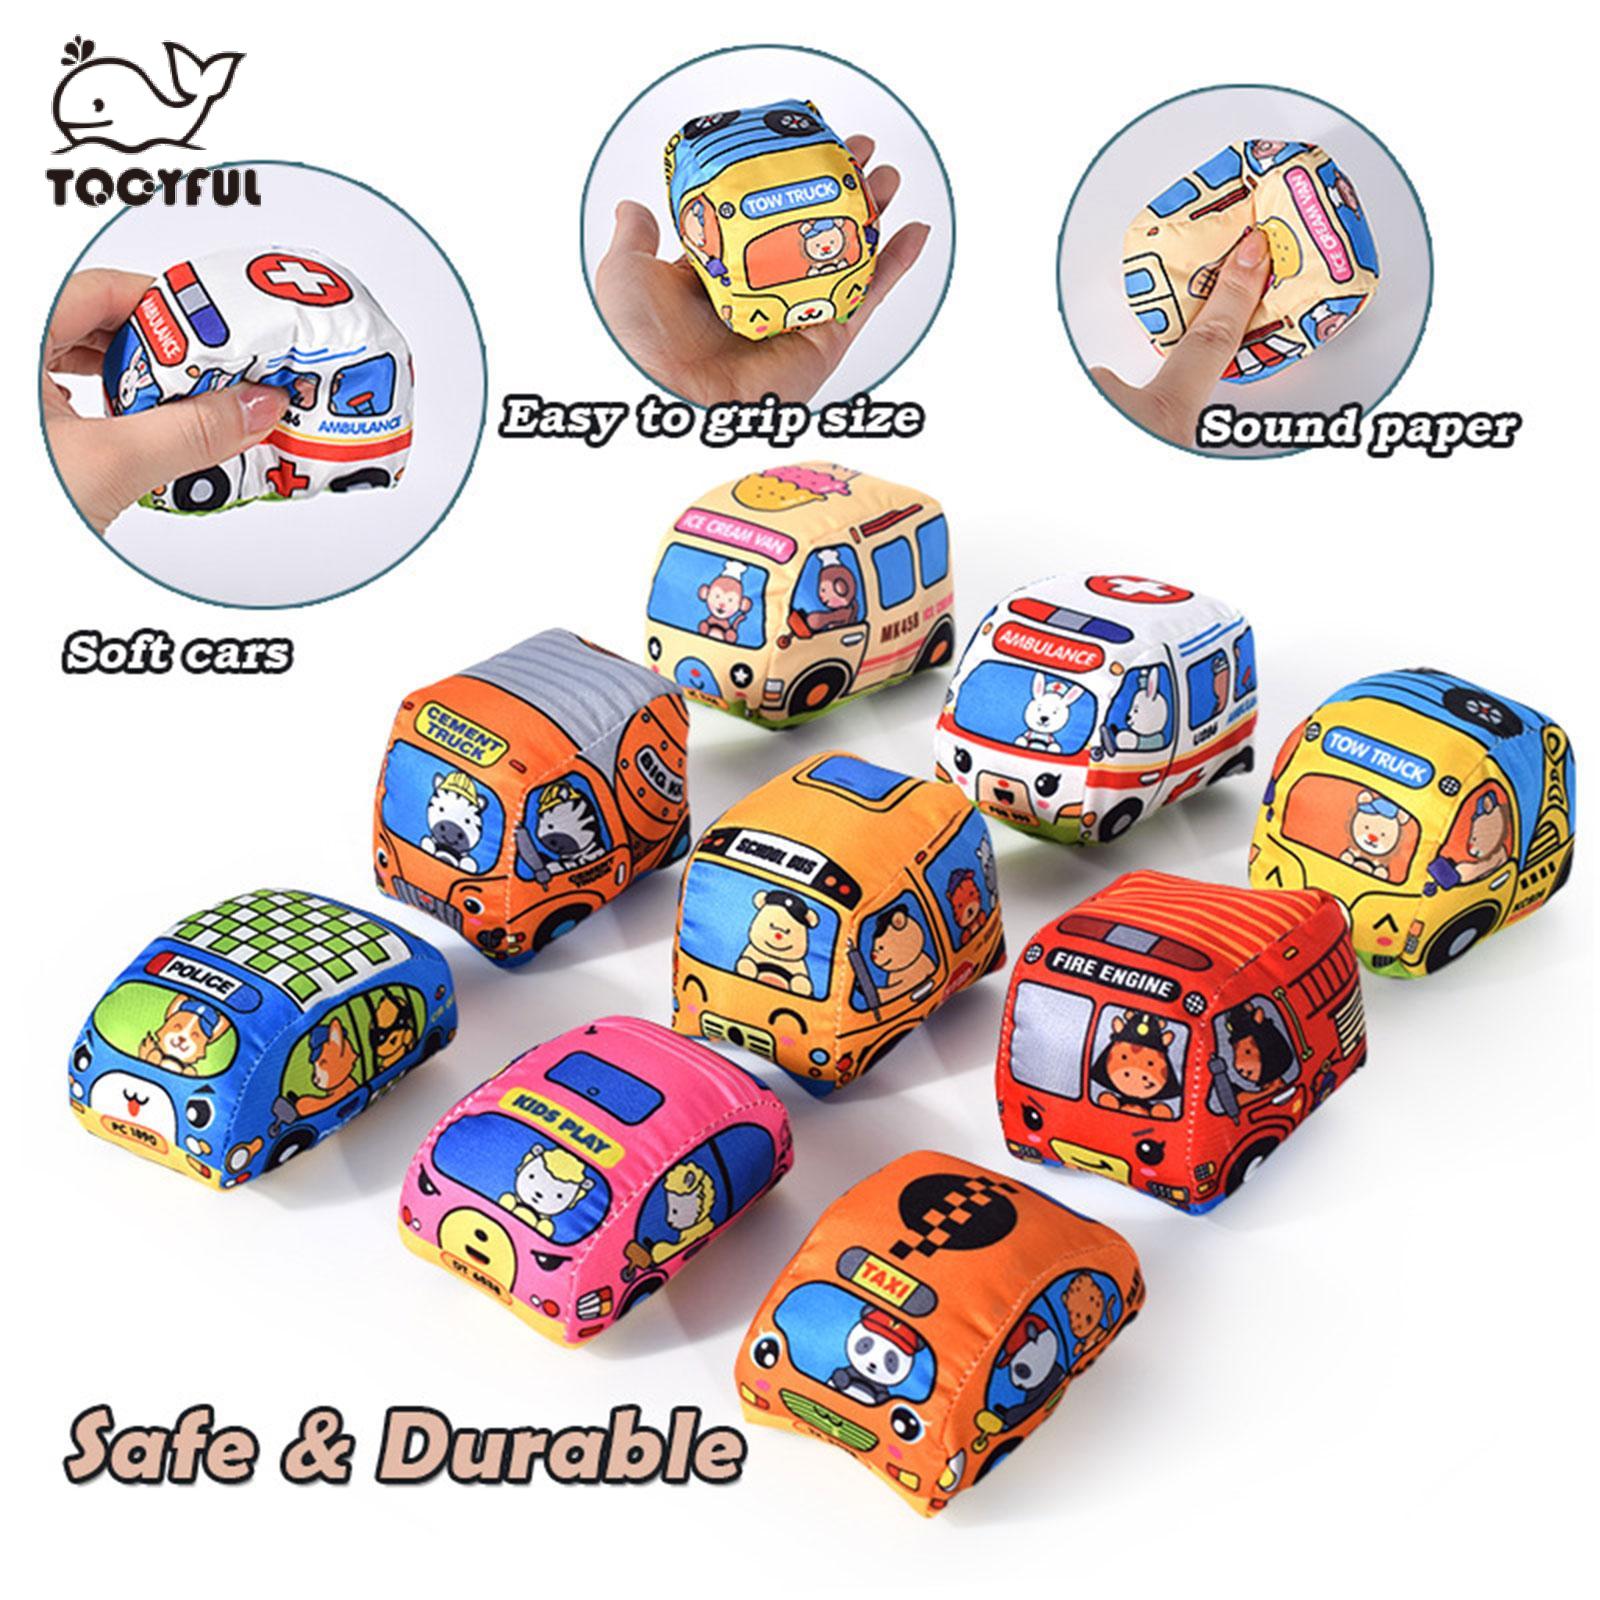 TOOYFUL Soft Cars Kids Toy Cars Motor Skills Game Preschool Soft Baby Toy